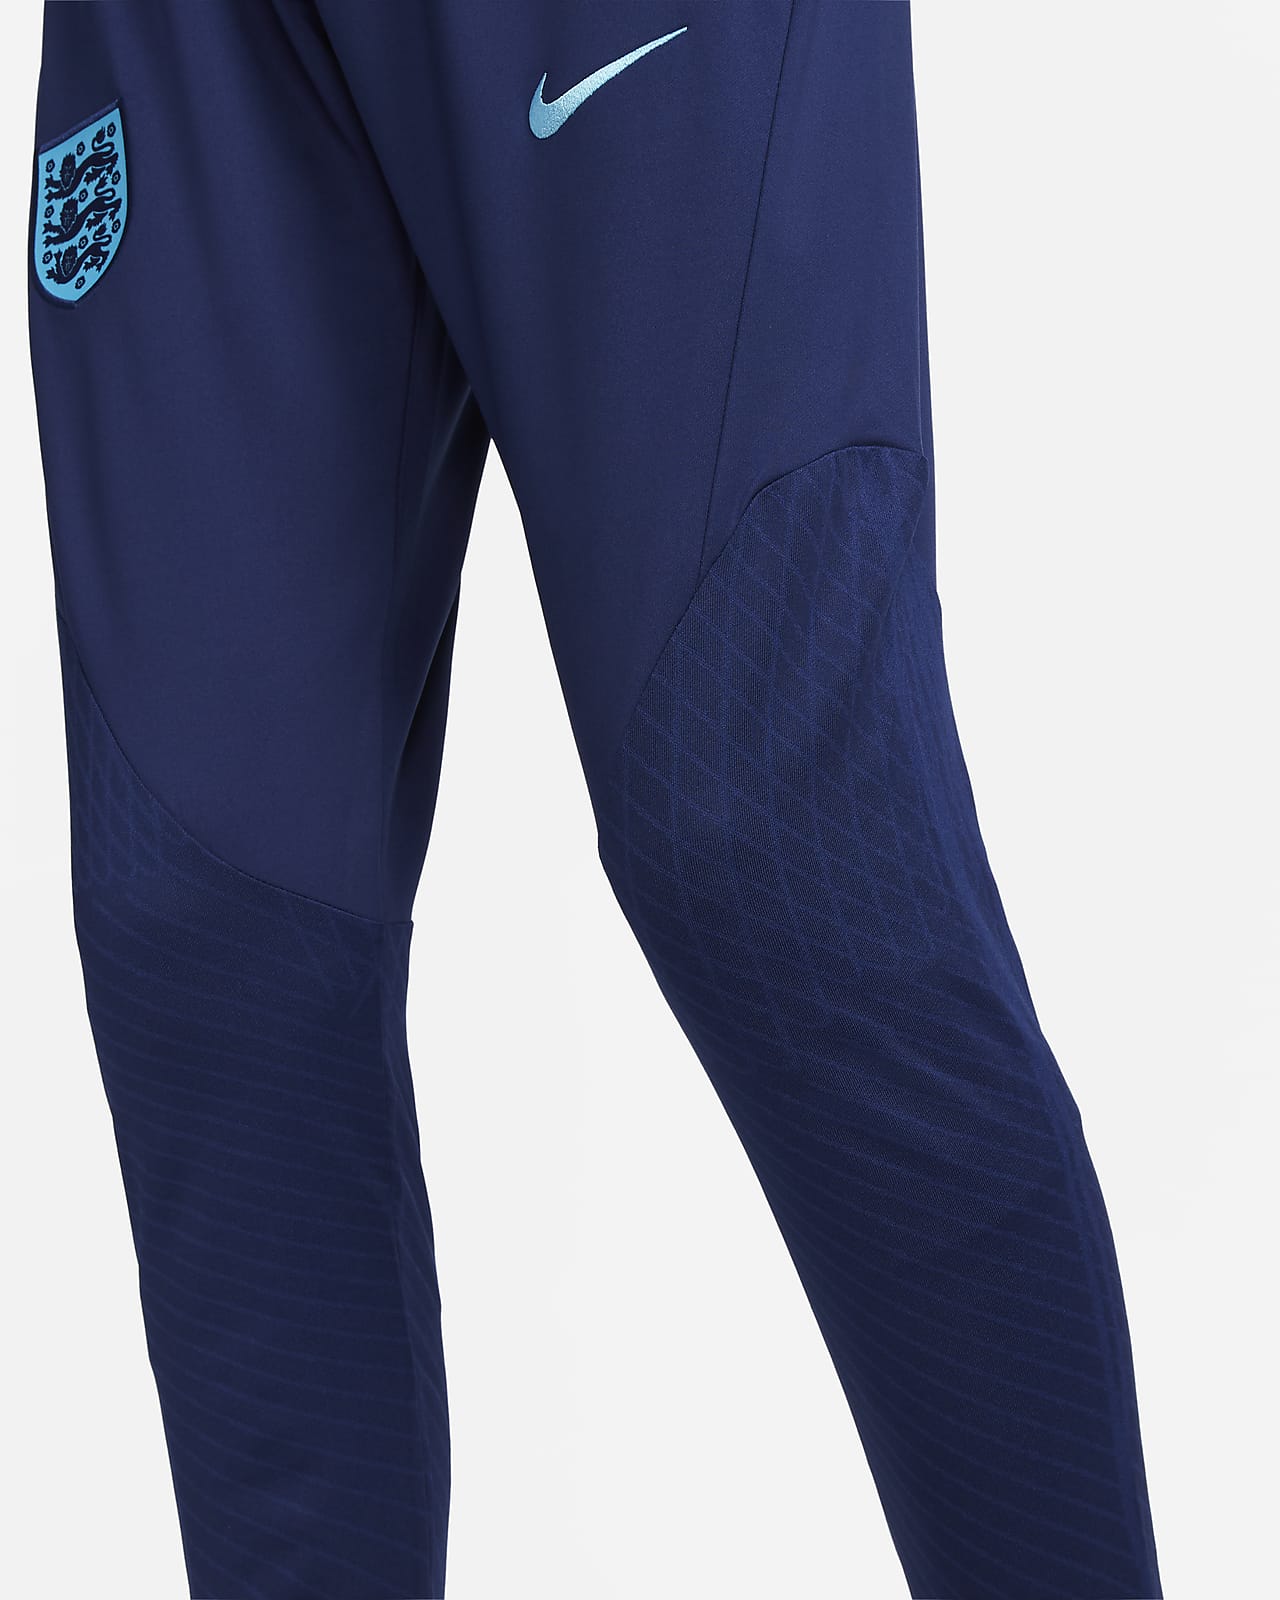 Buy Nike Men Navy Blue Solid AS M DRY-FIT NK Football Track Pants